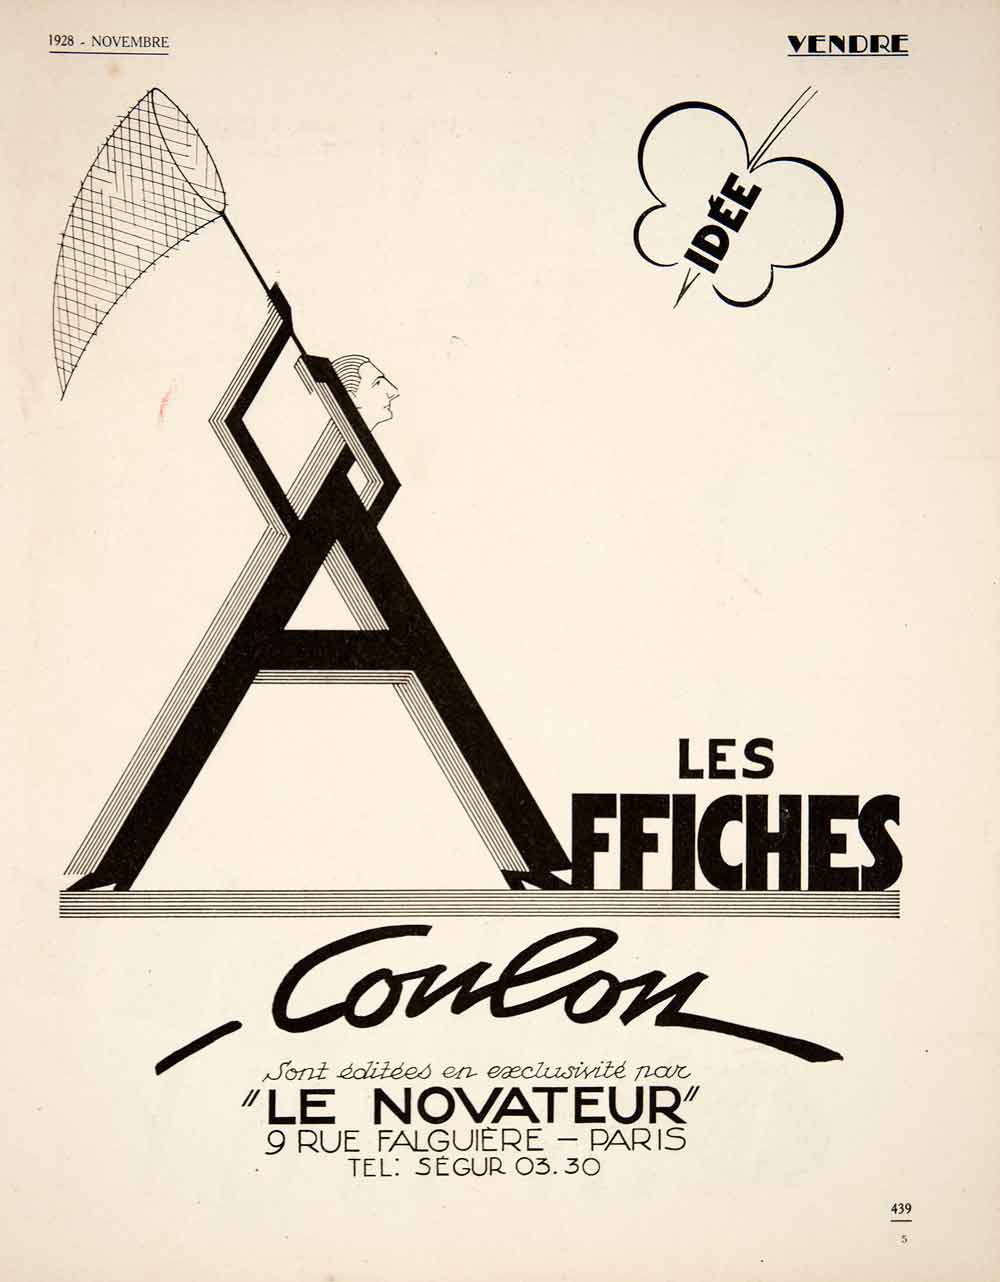 1928 Ad French Art Deco Les Affiches Coulon Advertising Agency Paris France VEN5